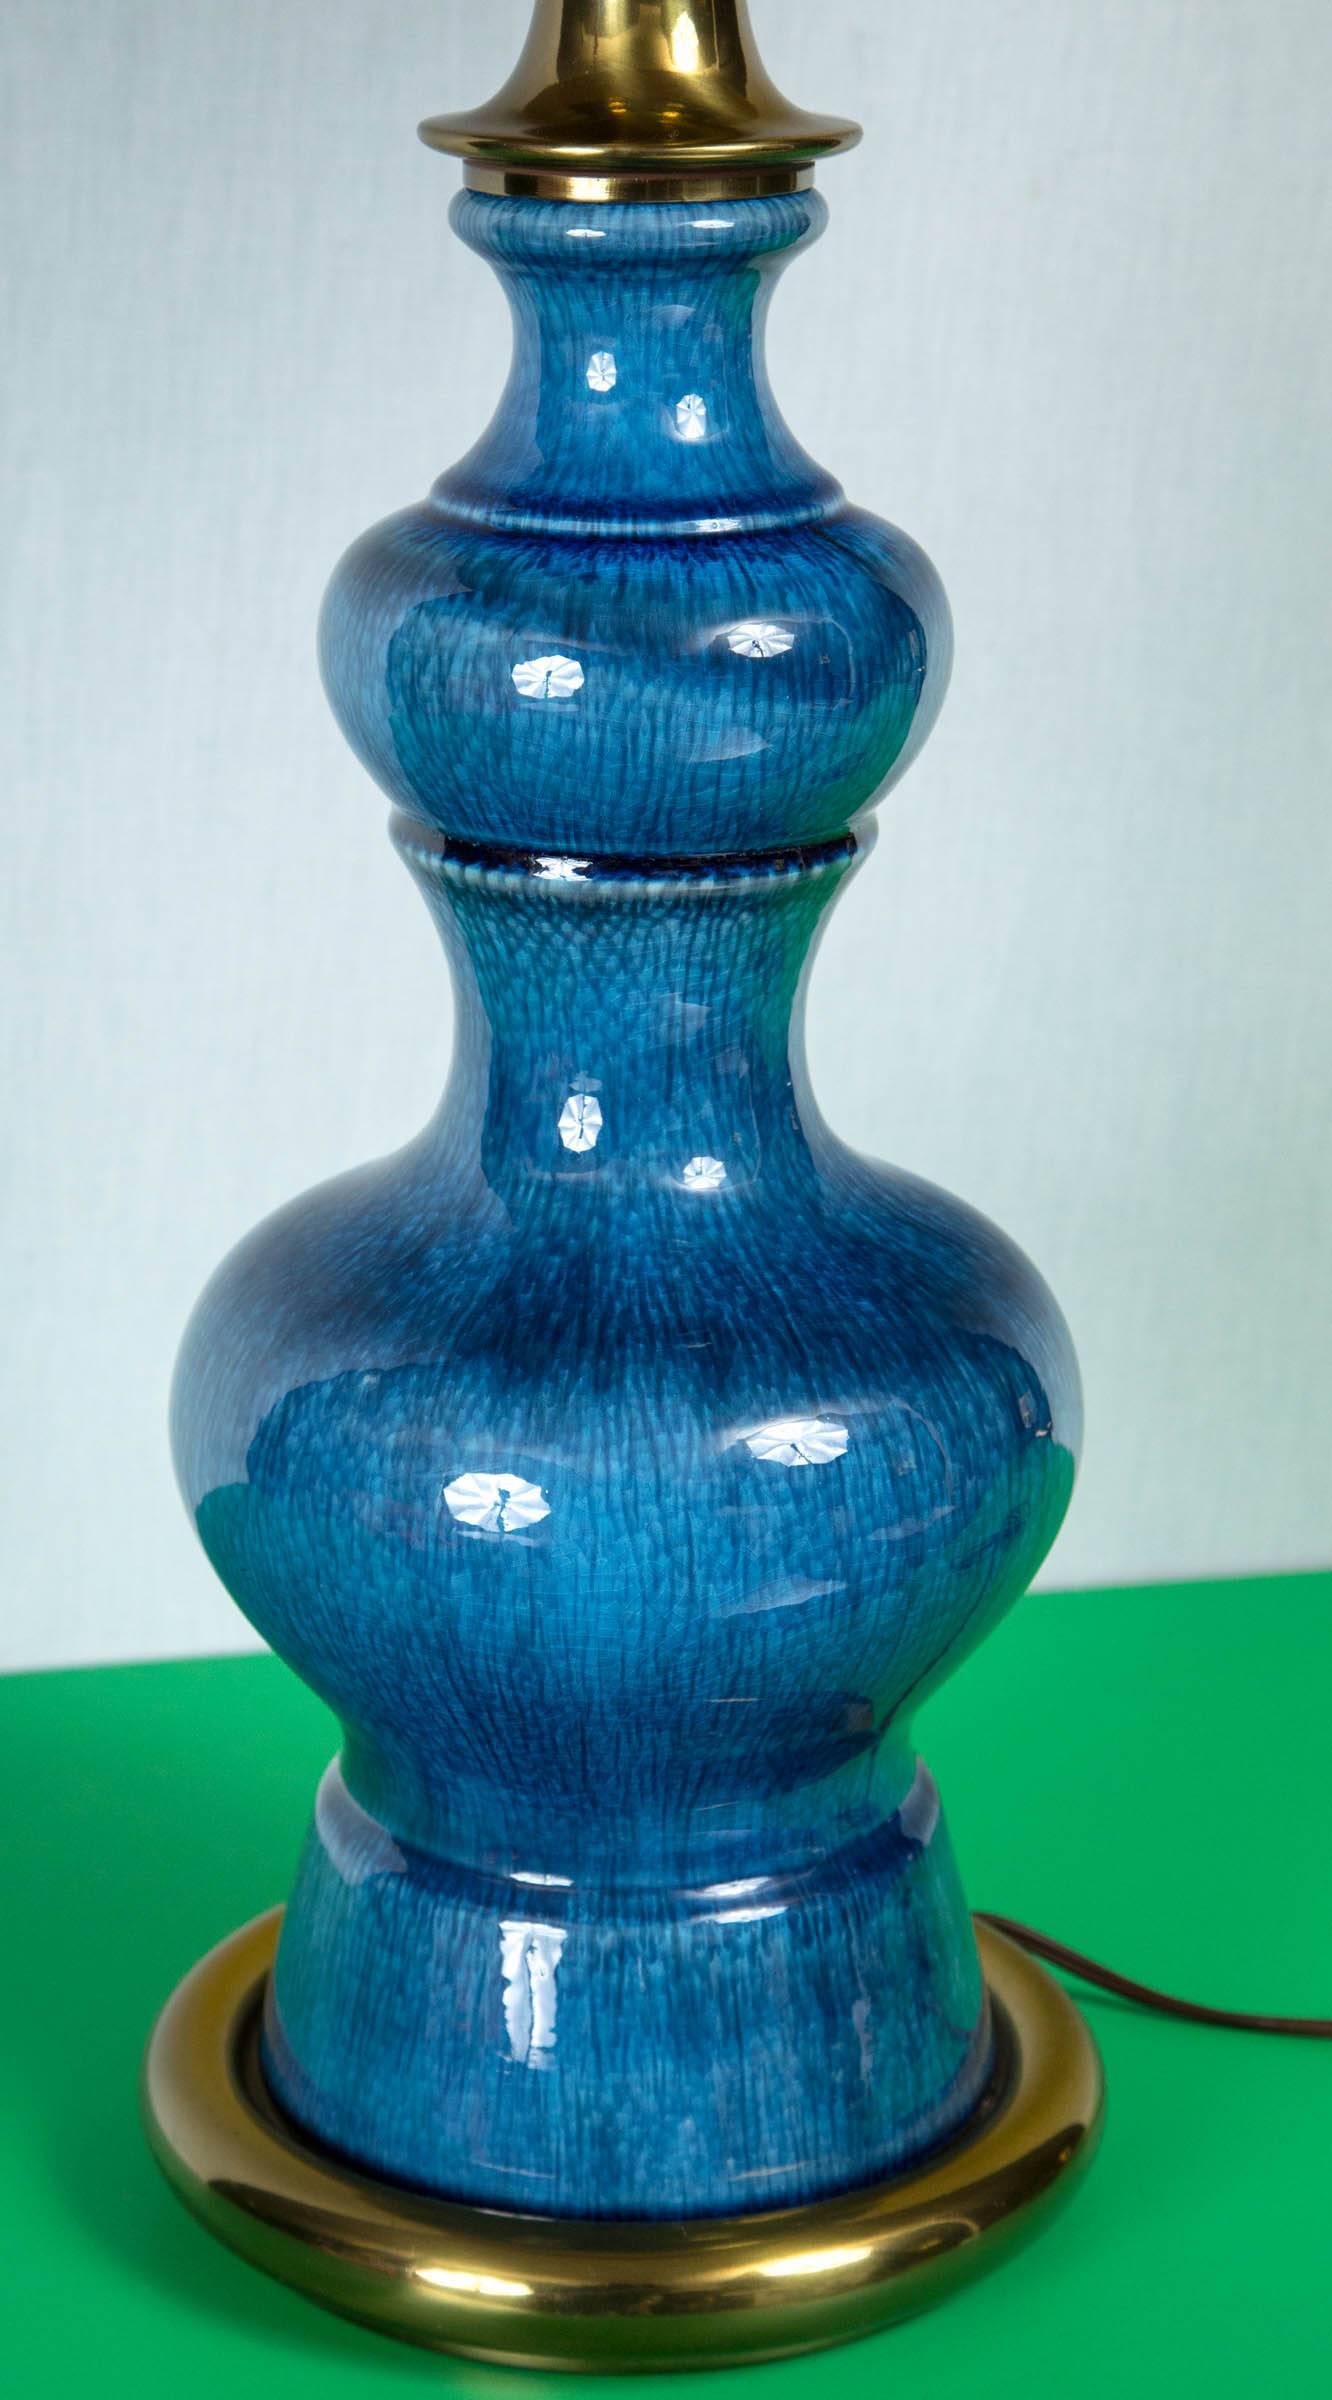 Pair of Midcentury Modern Blue Ceramic Stiffel Lamps with Original Shades 3